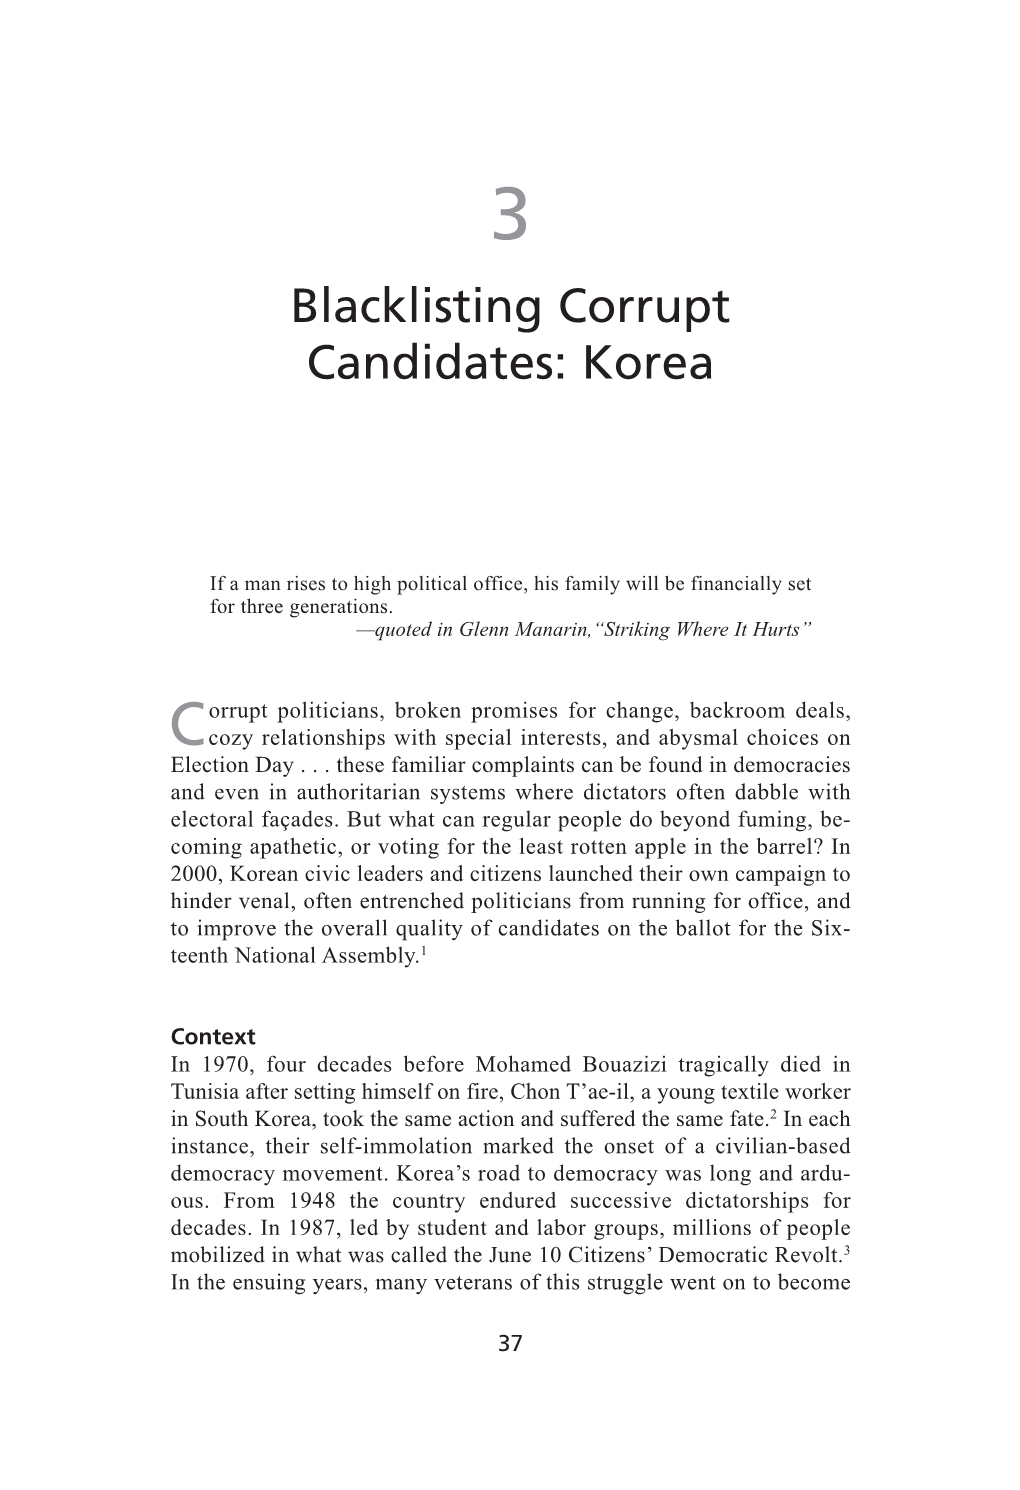 Blacklisting Corrupt Candidates: Korea